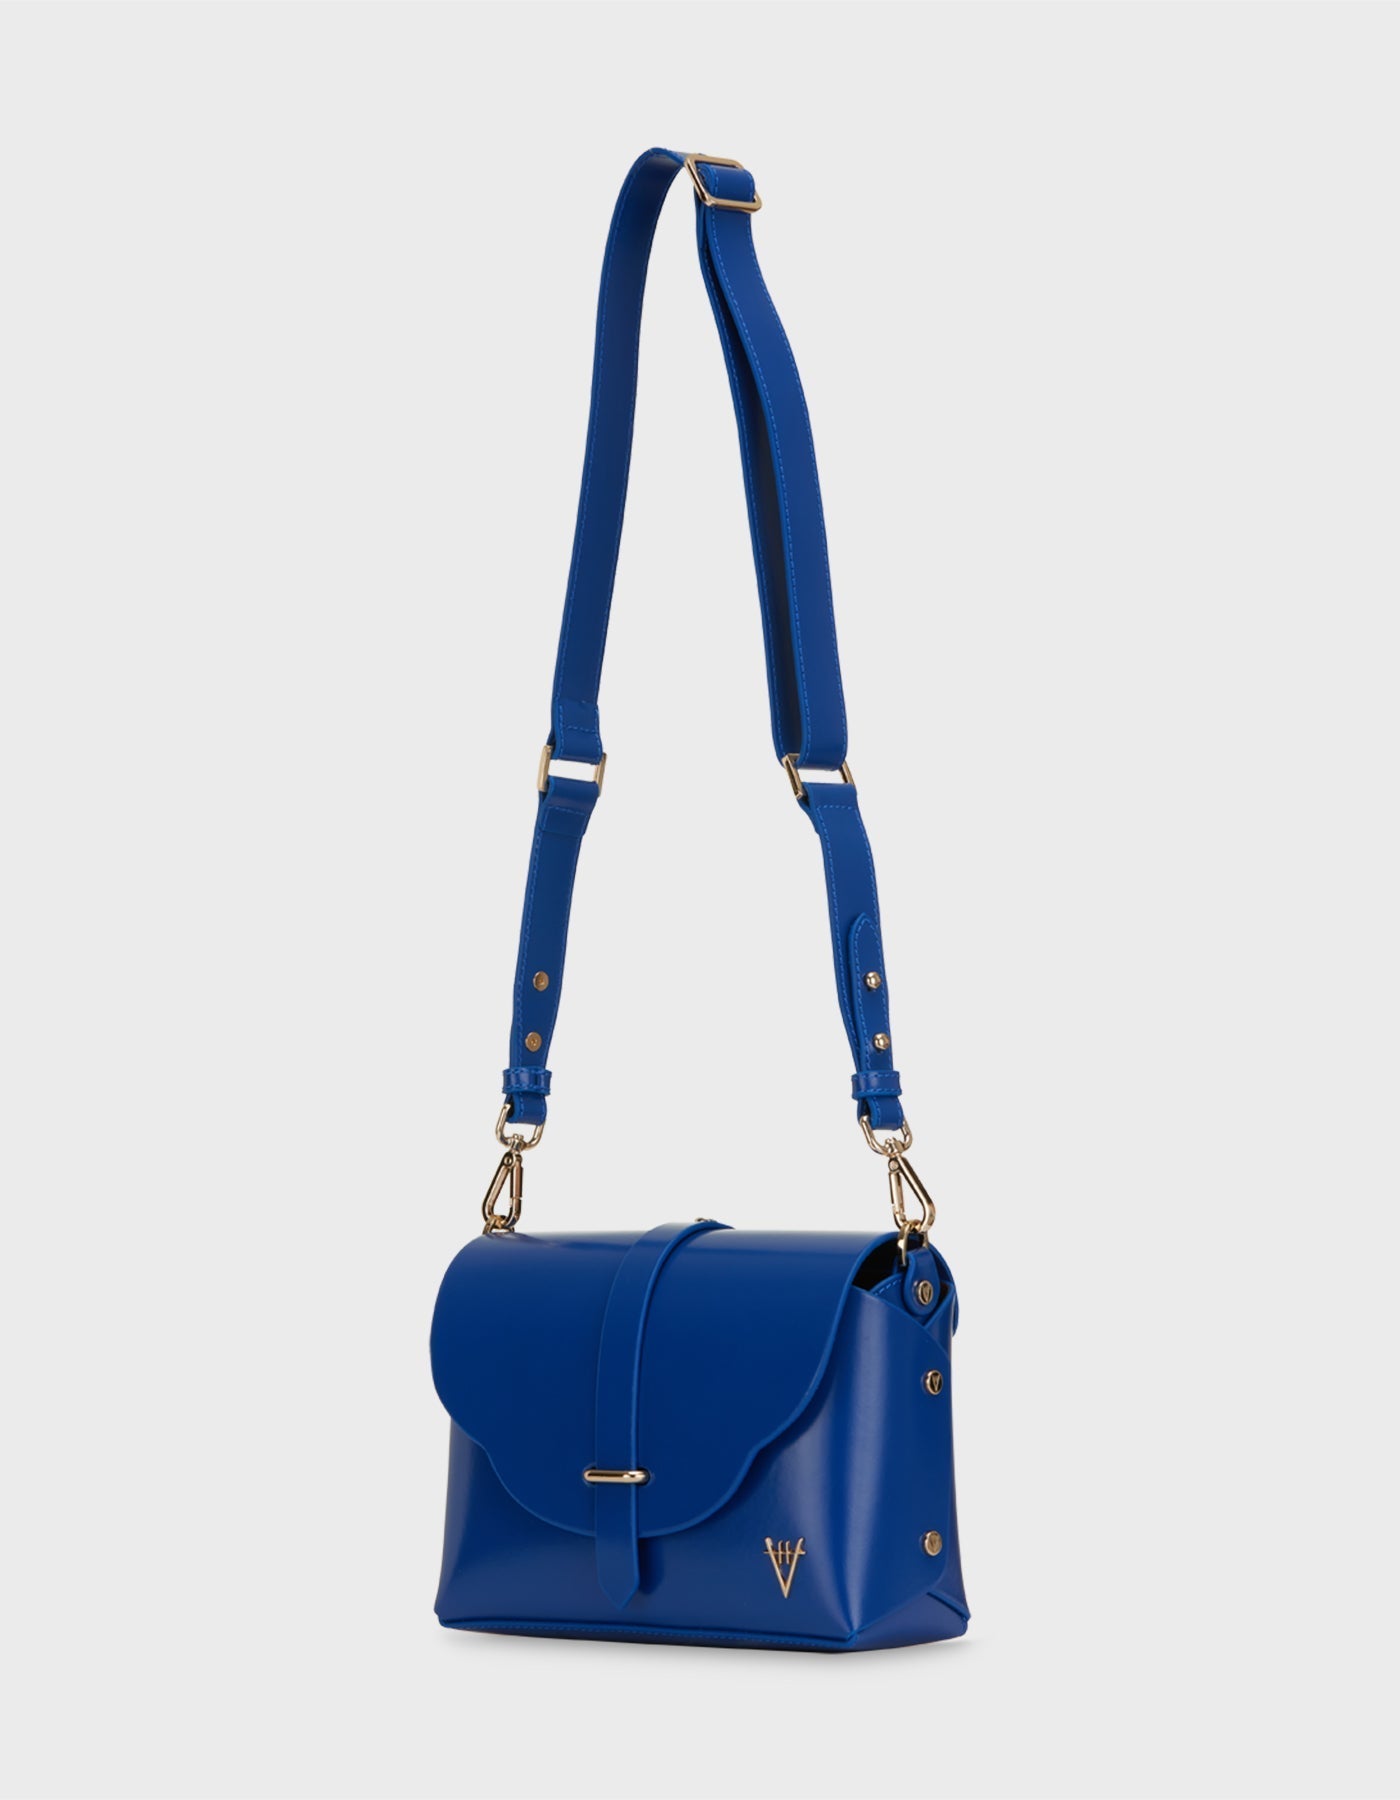 Hiva Atelier | Harmonia Shoulder Bag Sodalite Blue | Beautiful and Versatile